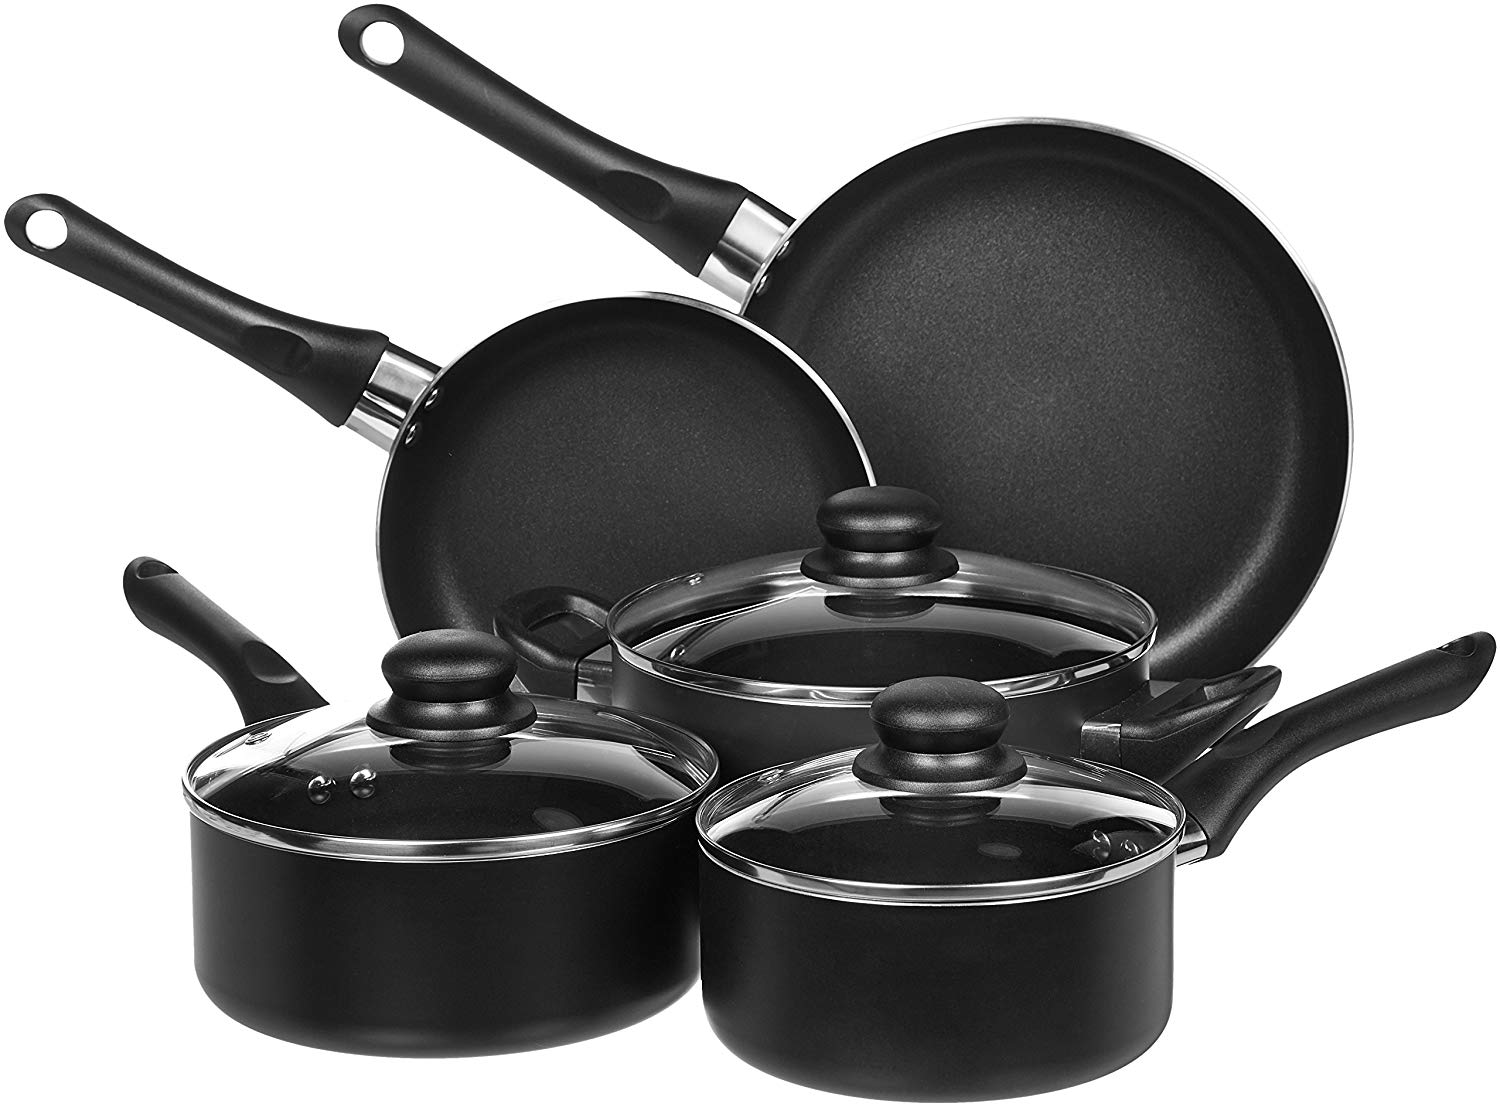 https://www.dontwasteyourmoney.com/wp-content/uploads/2019/09/amazonbasics-8-piece-non-stick-kitchen-cookware-set-pots-and-pans-enamel-cookware-set.jpg